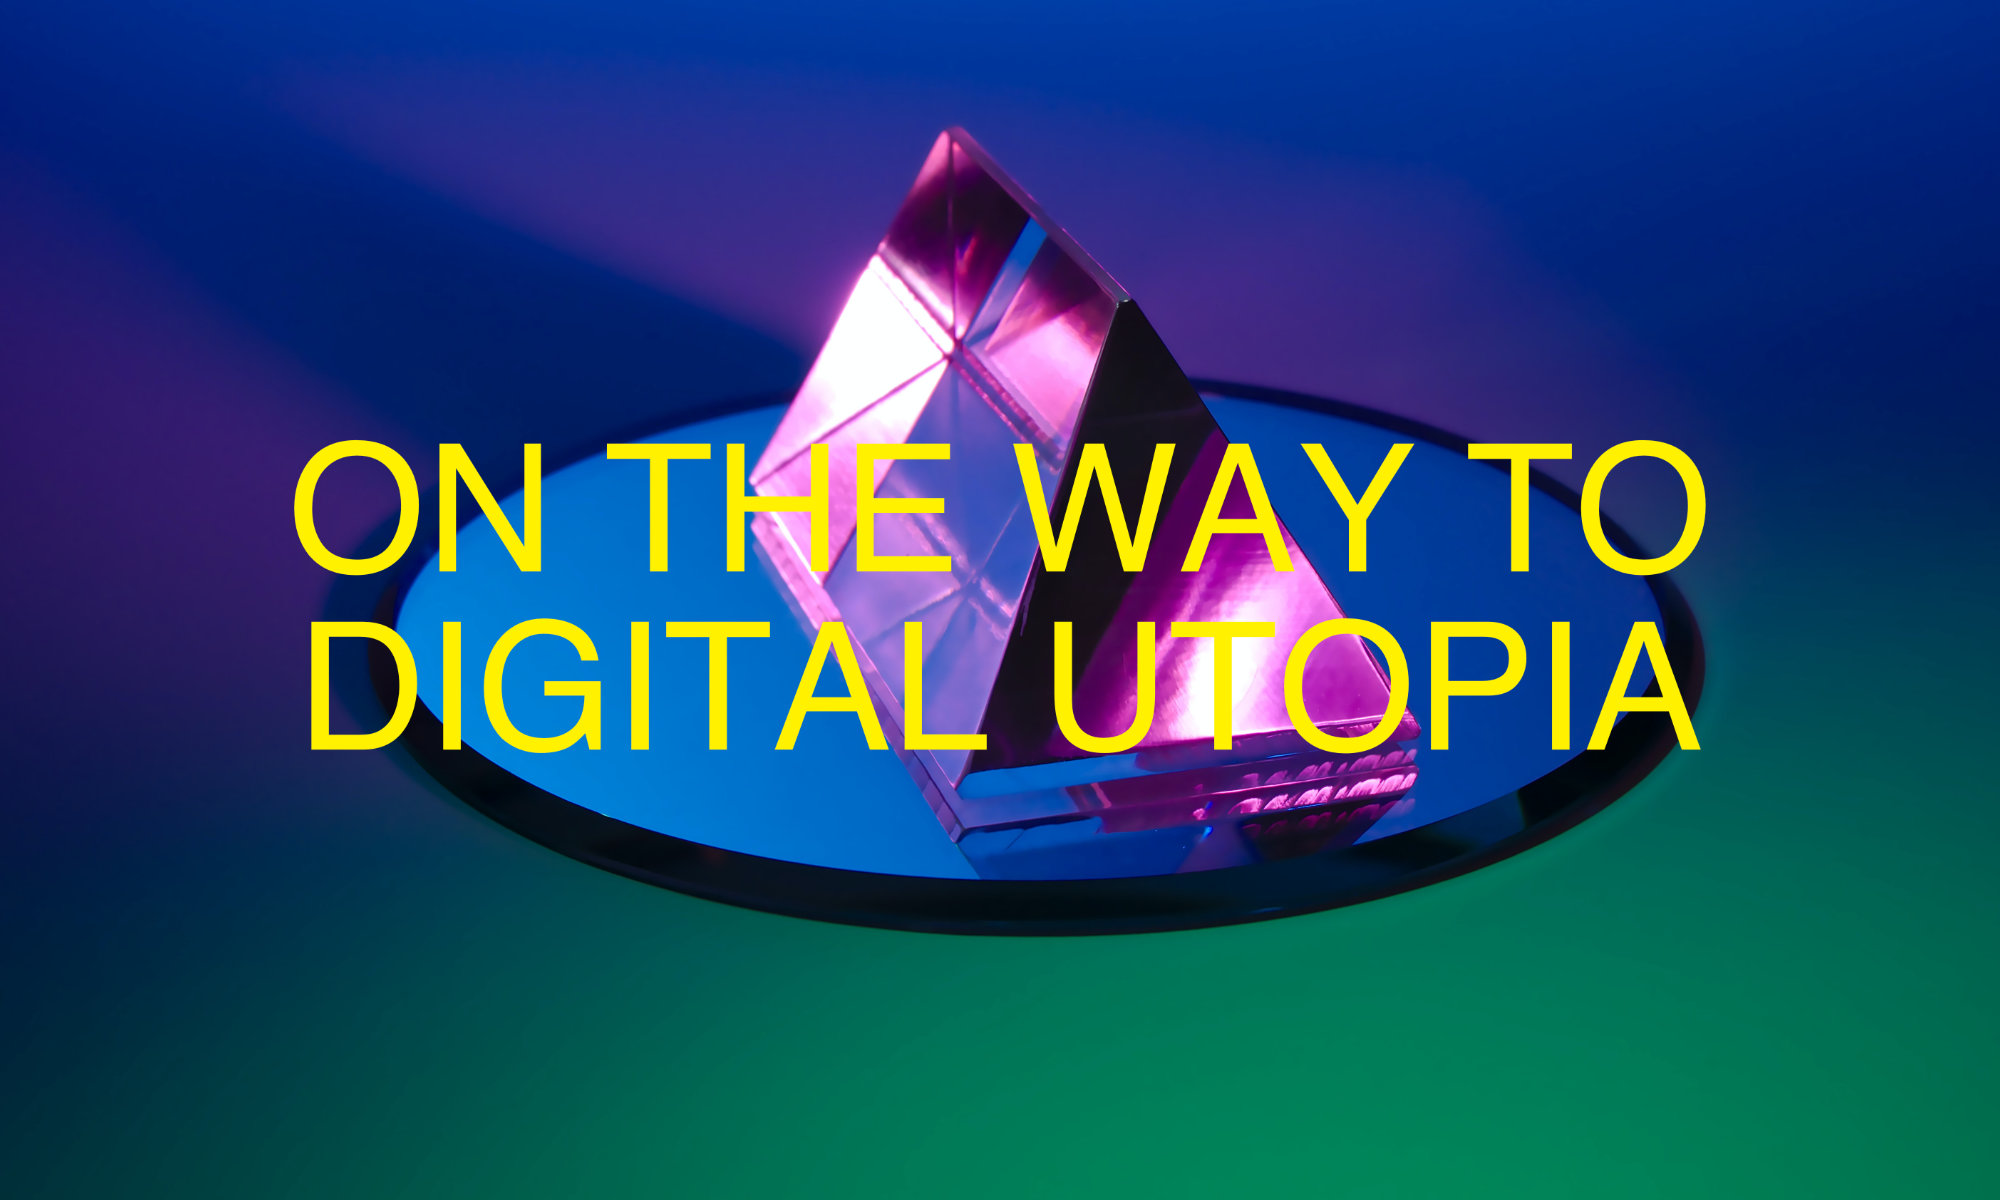 Digital Utopia Workshops